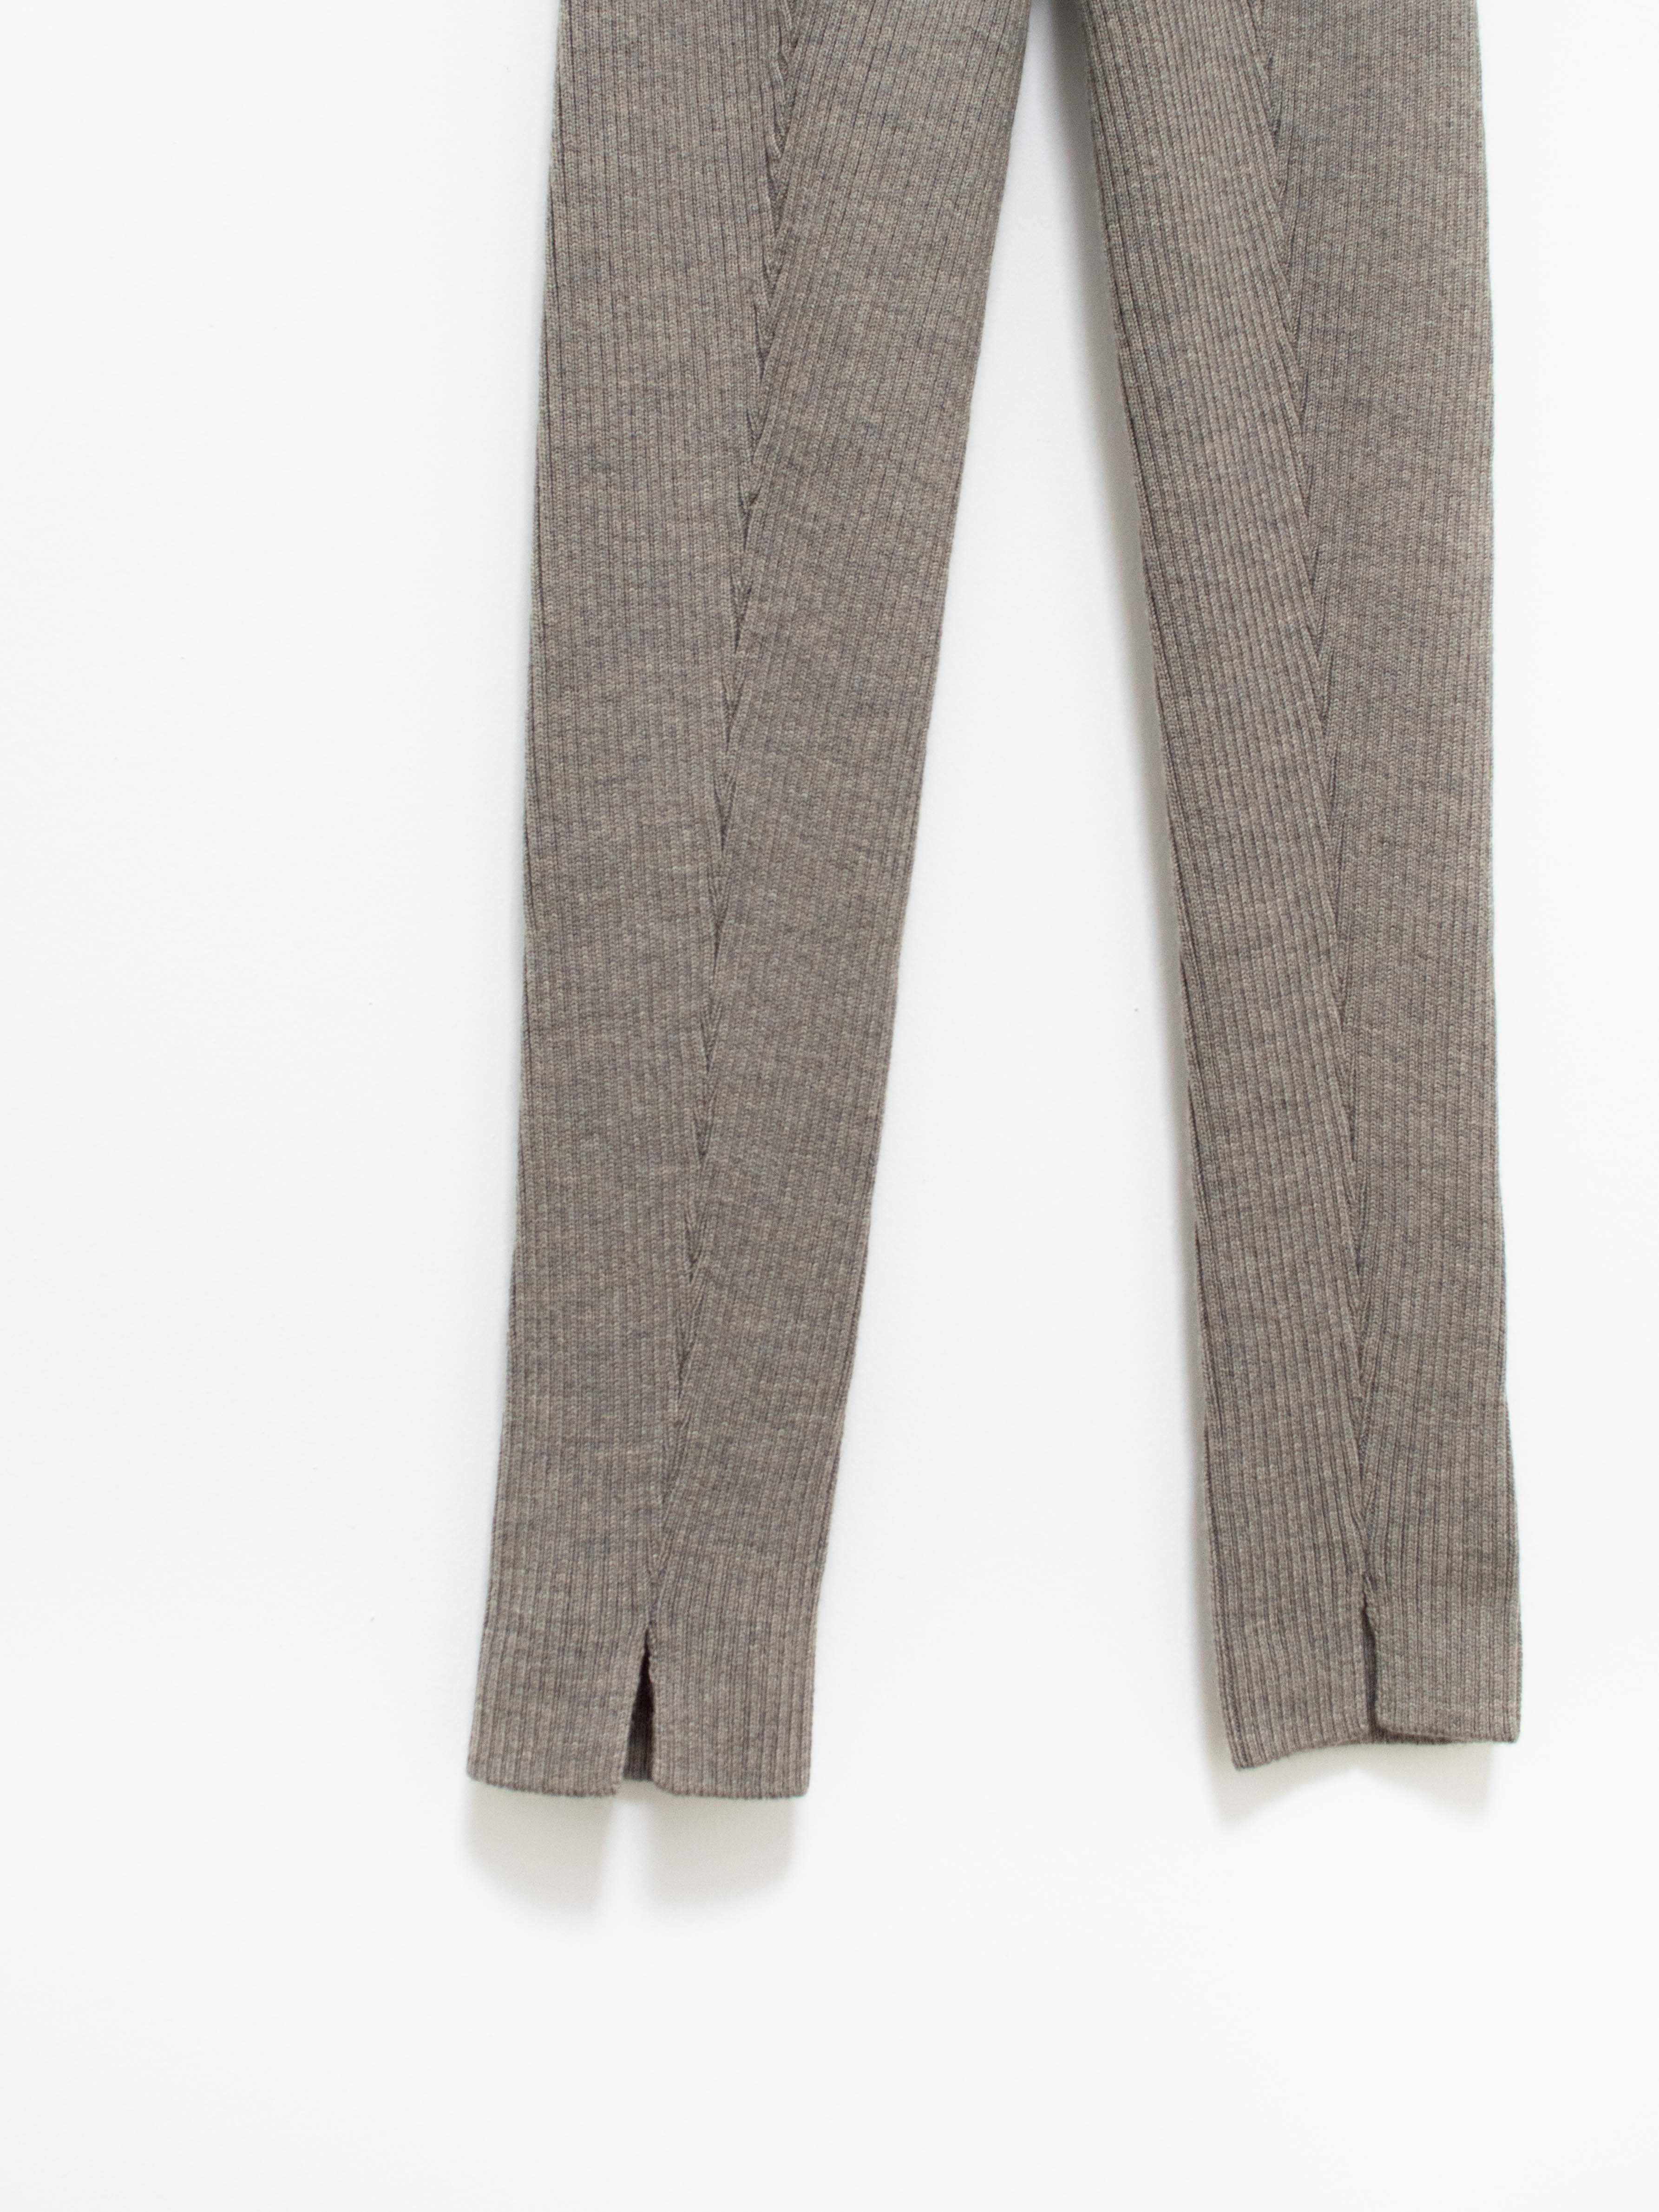 Namu Shop - Phlannel Worsted Wool Knit Rib Pants - Mix Beige